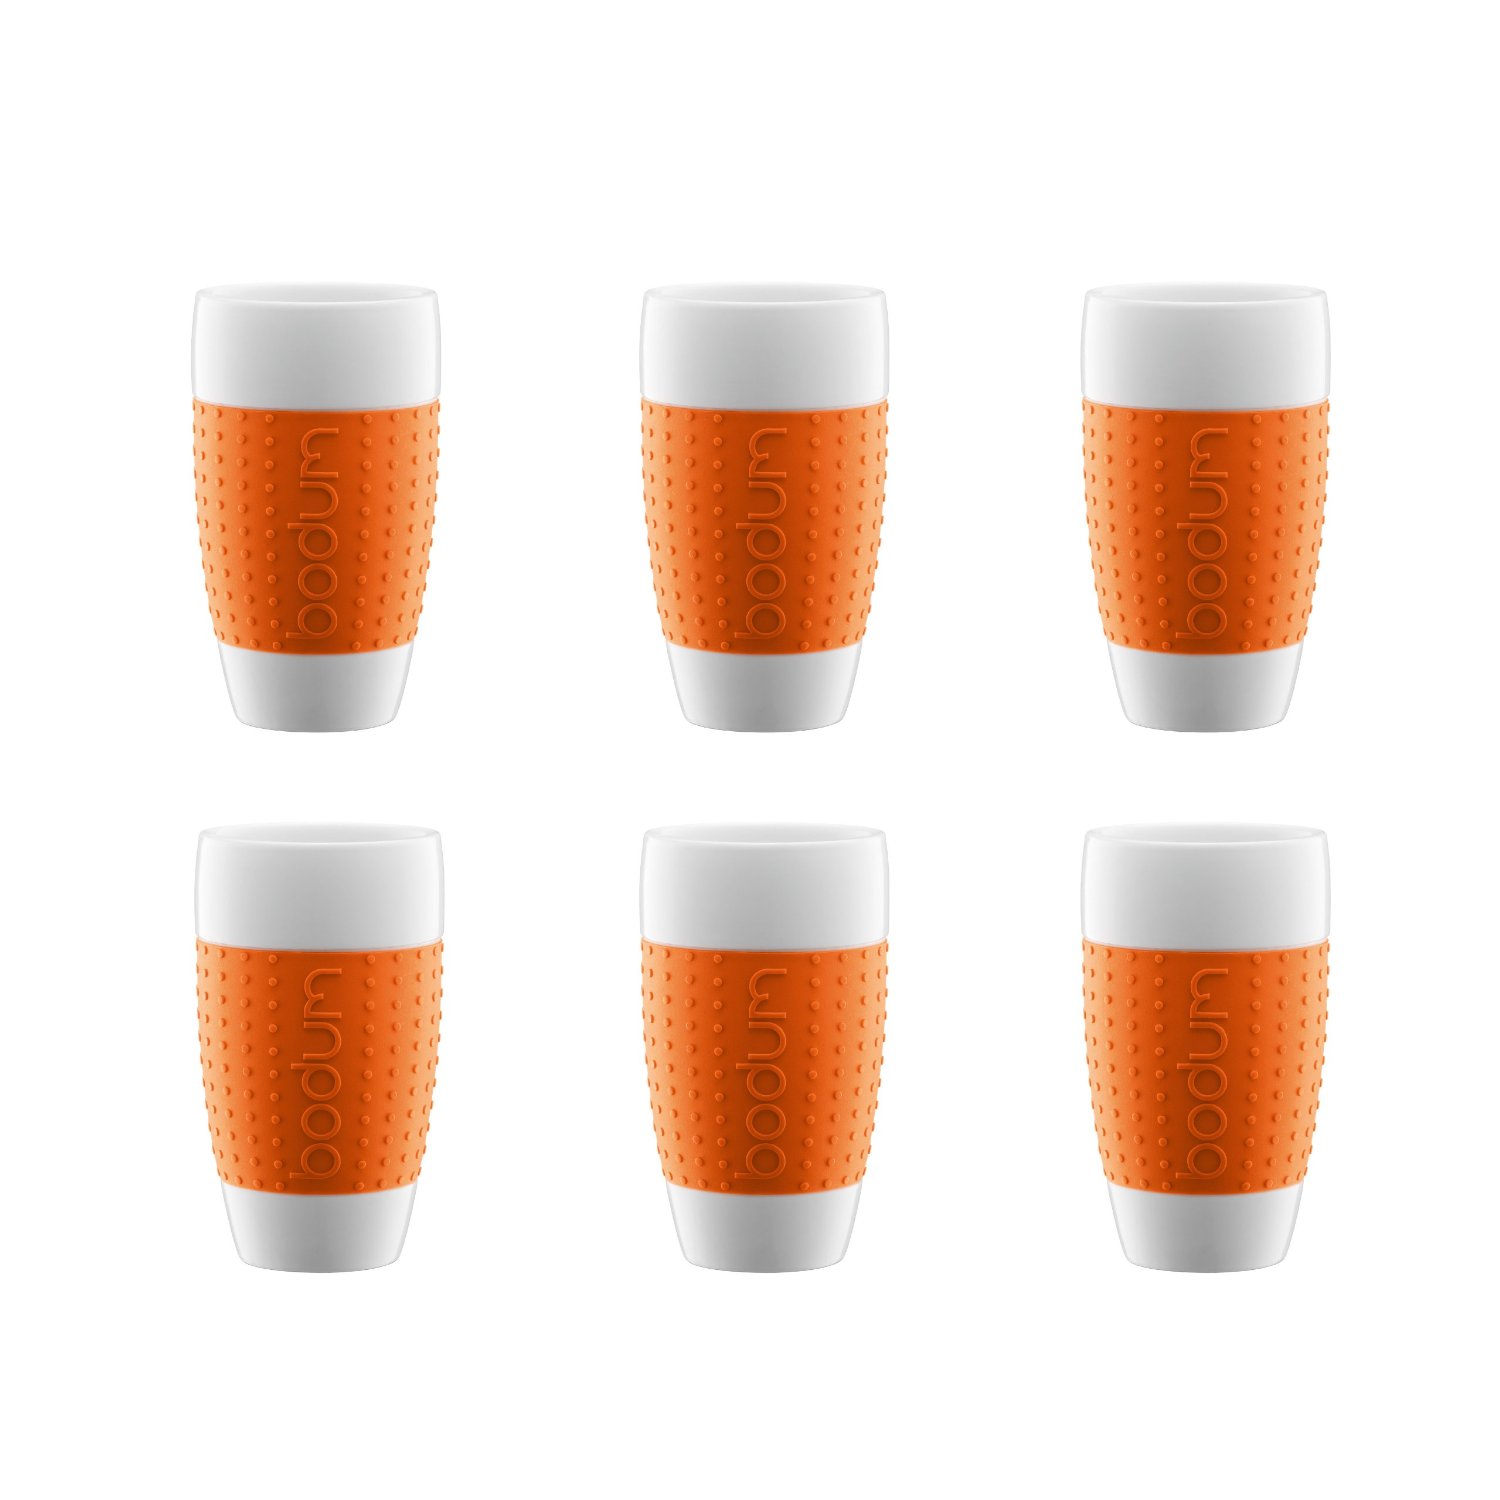   Bodum 17-Ounce Pavina Porcelain Cups with Silicone Grip, Set of 6 - Orange  $45.62